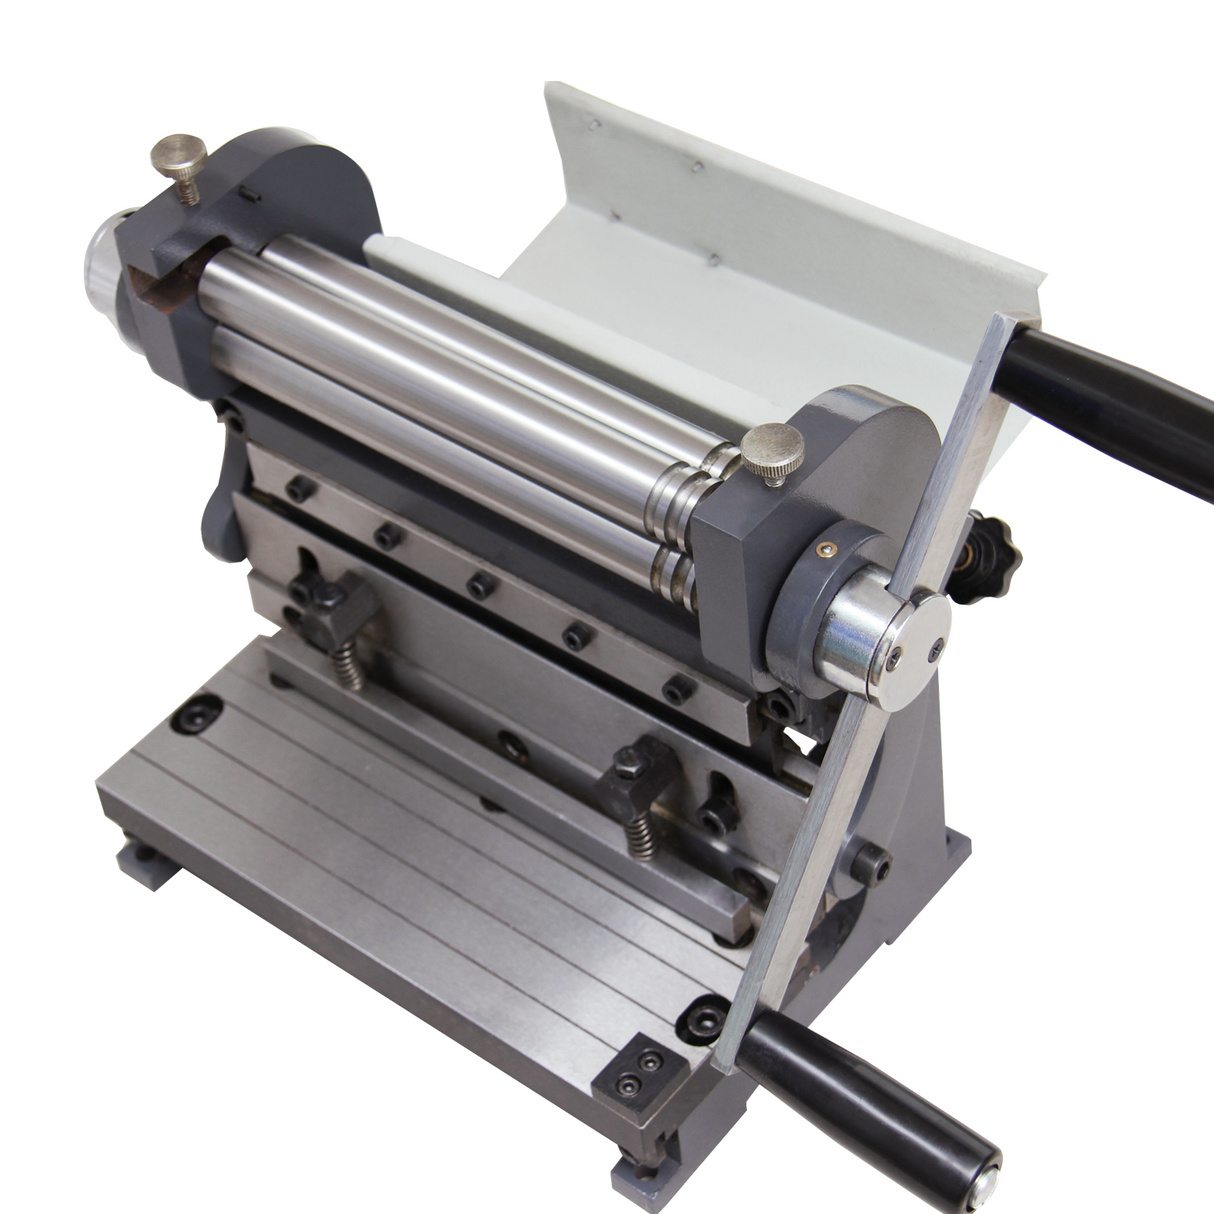 KANG Industrial 3-IN-1/8, 200mm Combination Sheet Metal Brake,Shear Press Brake 1.0mm Capacity, Shears and Slip Roll Machine for Shear Bending Rolling